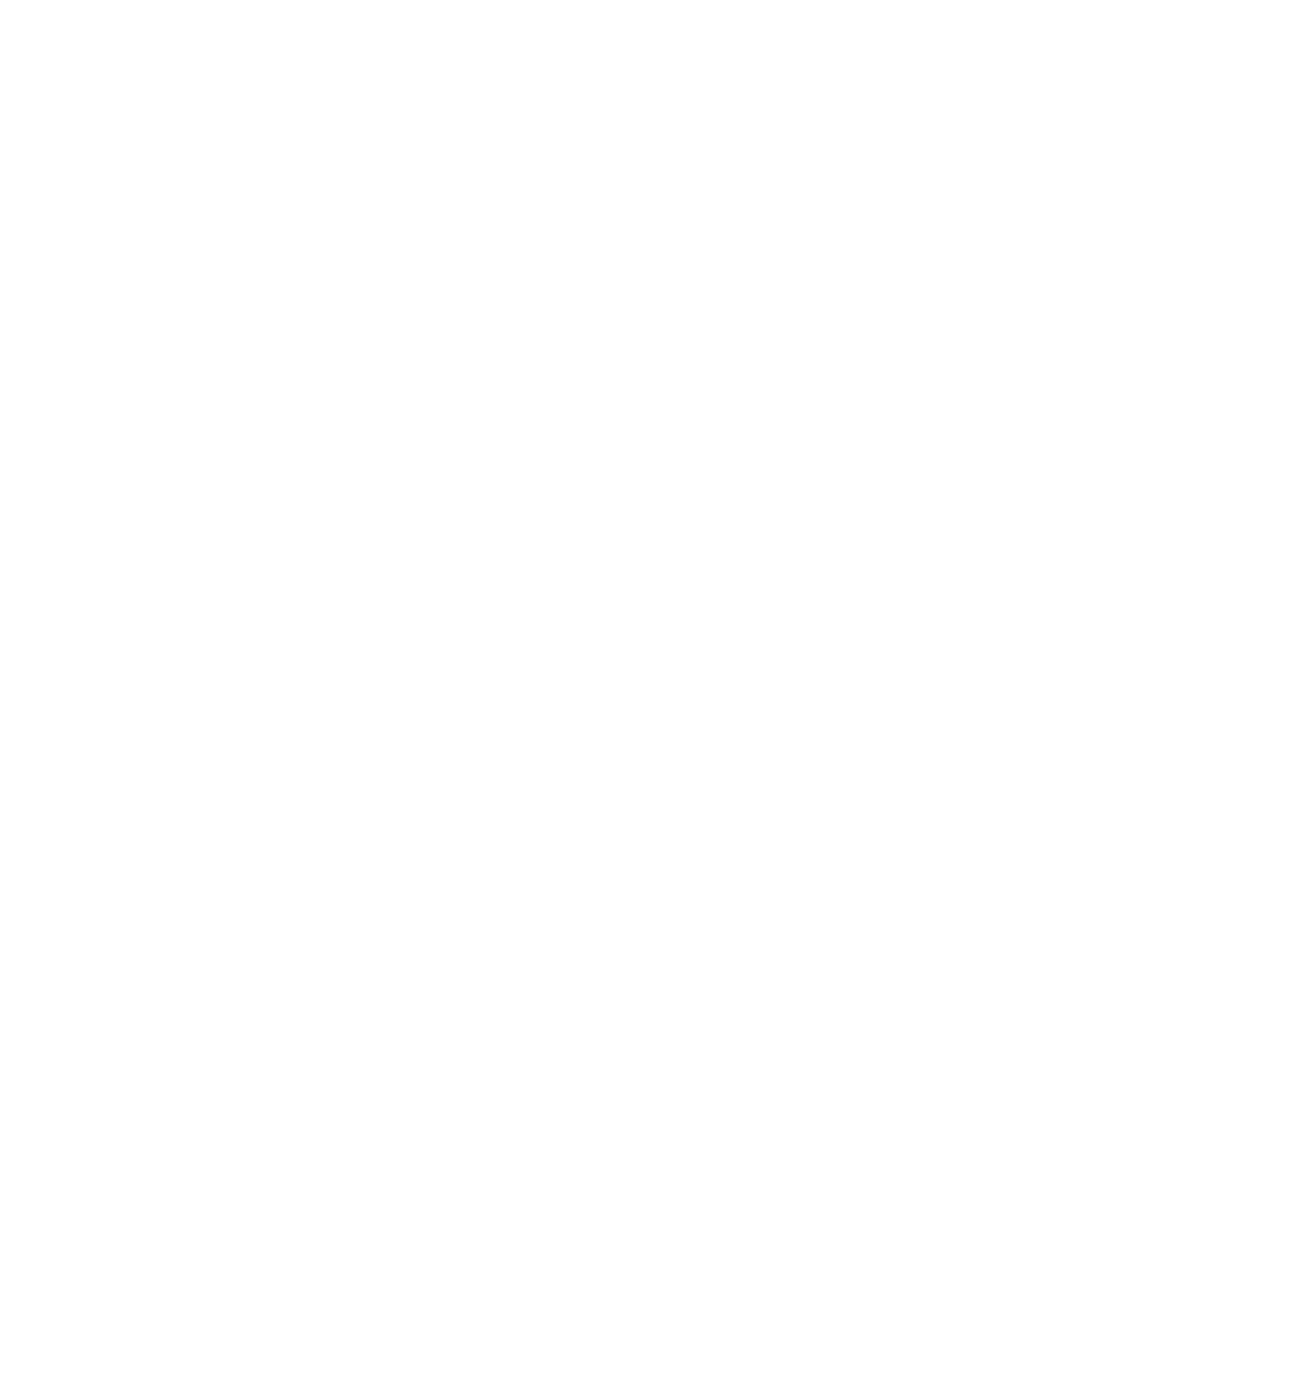 Cloven Hoof Brewing